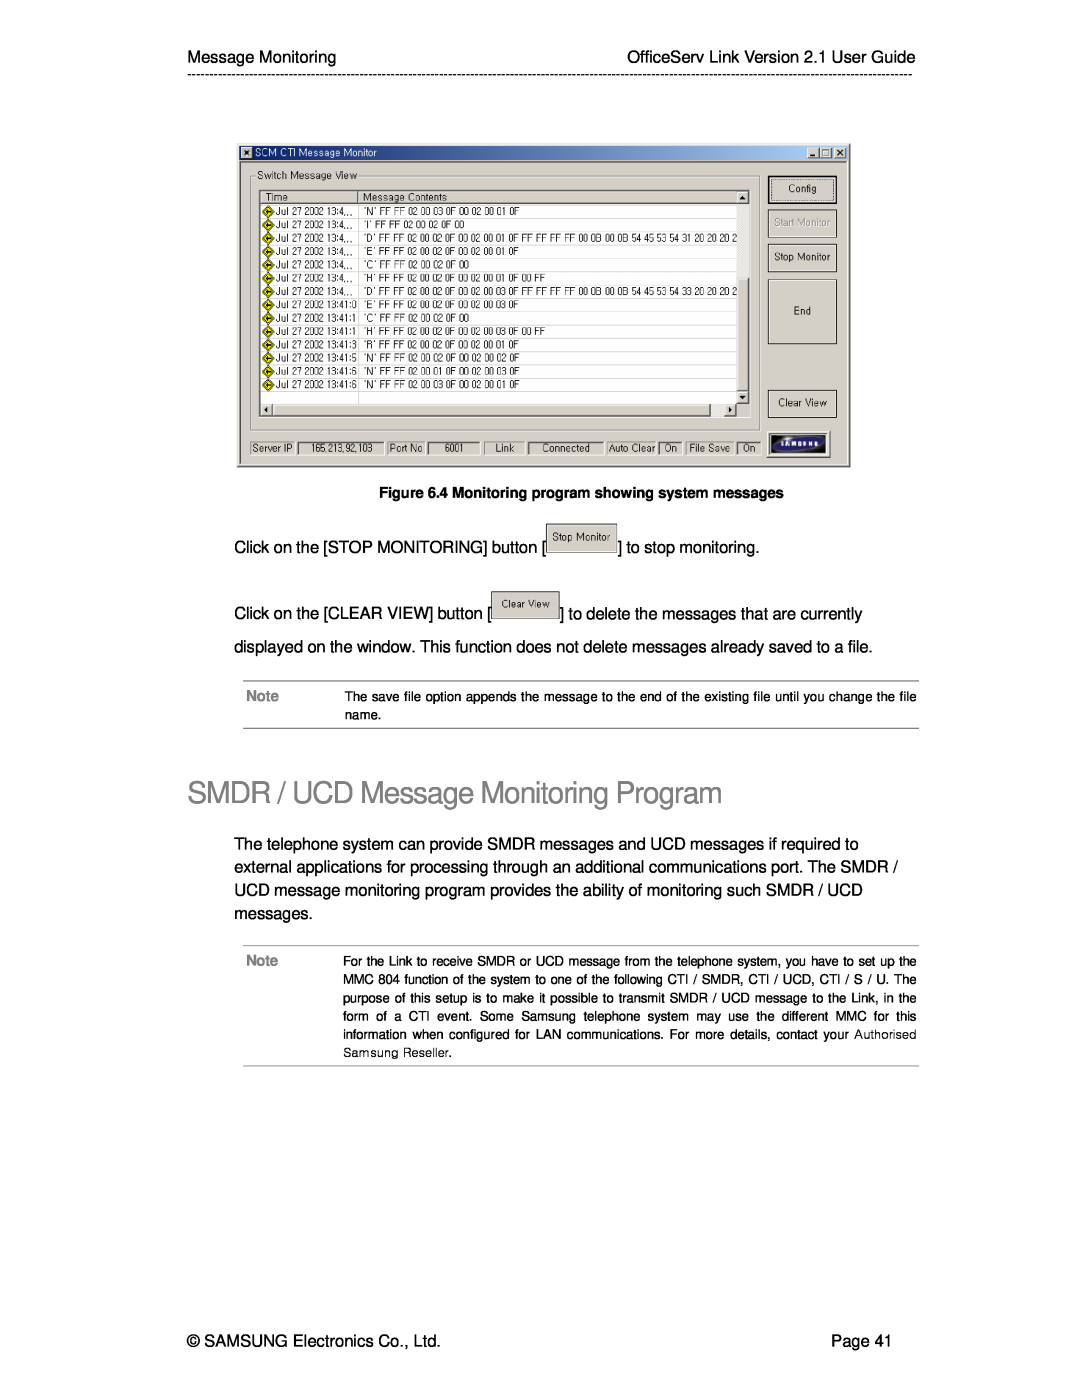 Samsung Version 2.1 manual SMDR / UCD Message Monitoring Program, 4 Monitoring program showing system messages 